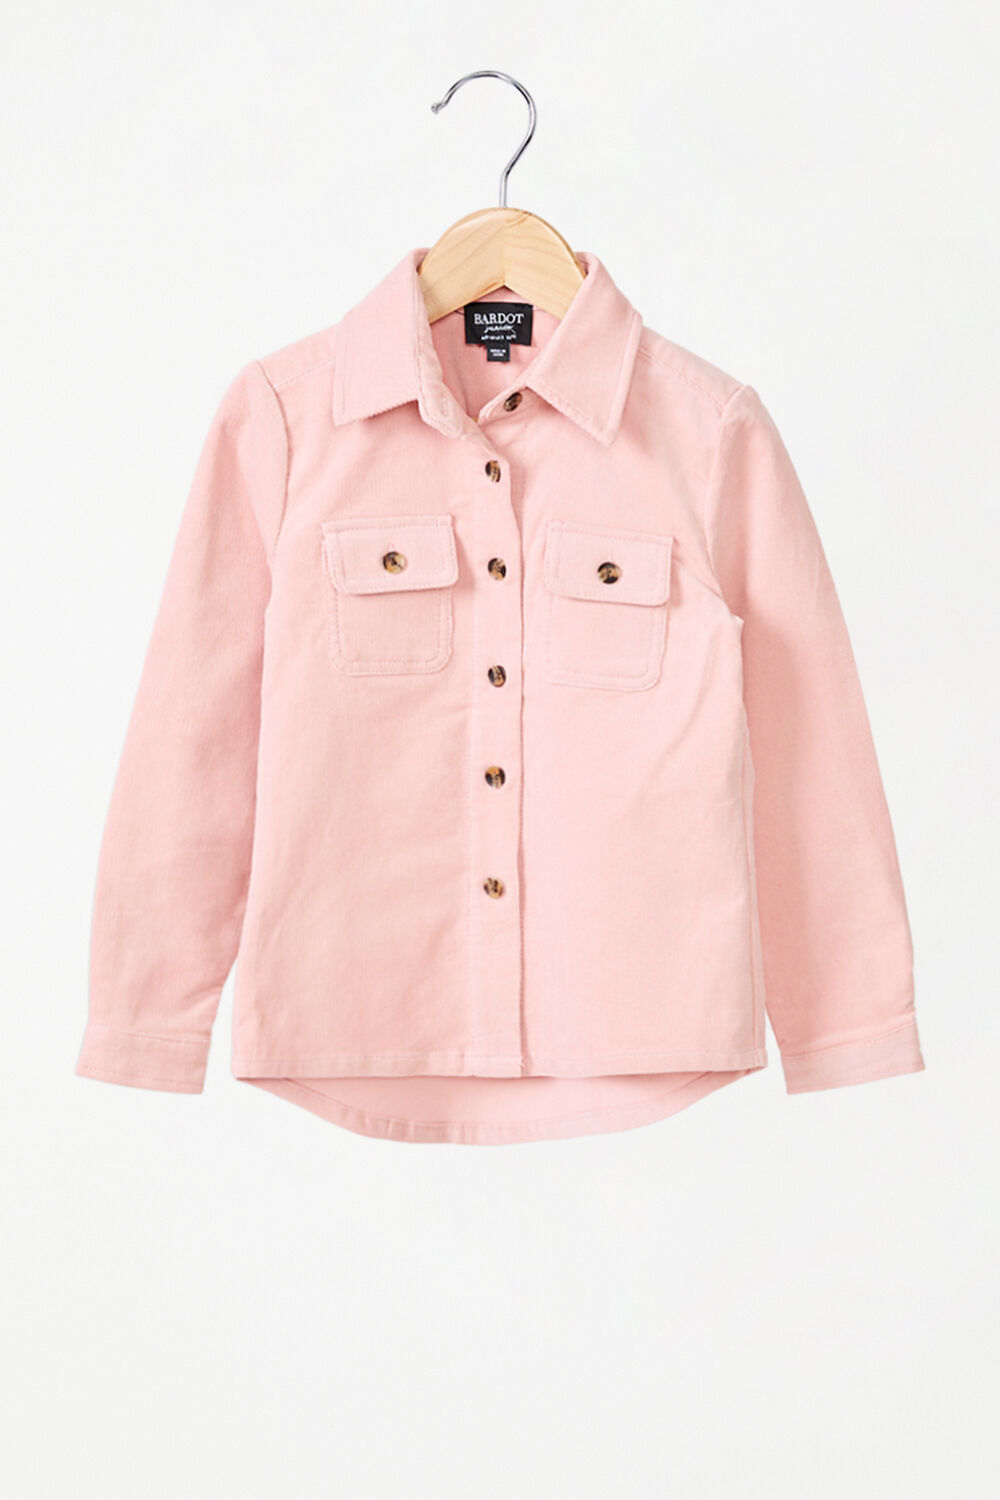 Girls Estelle Cord Shirt in Peach Pink